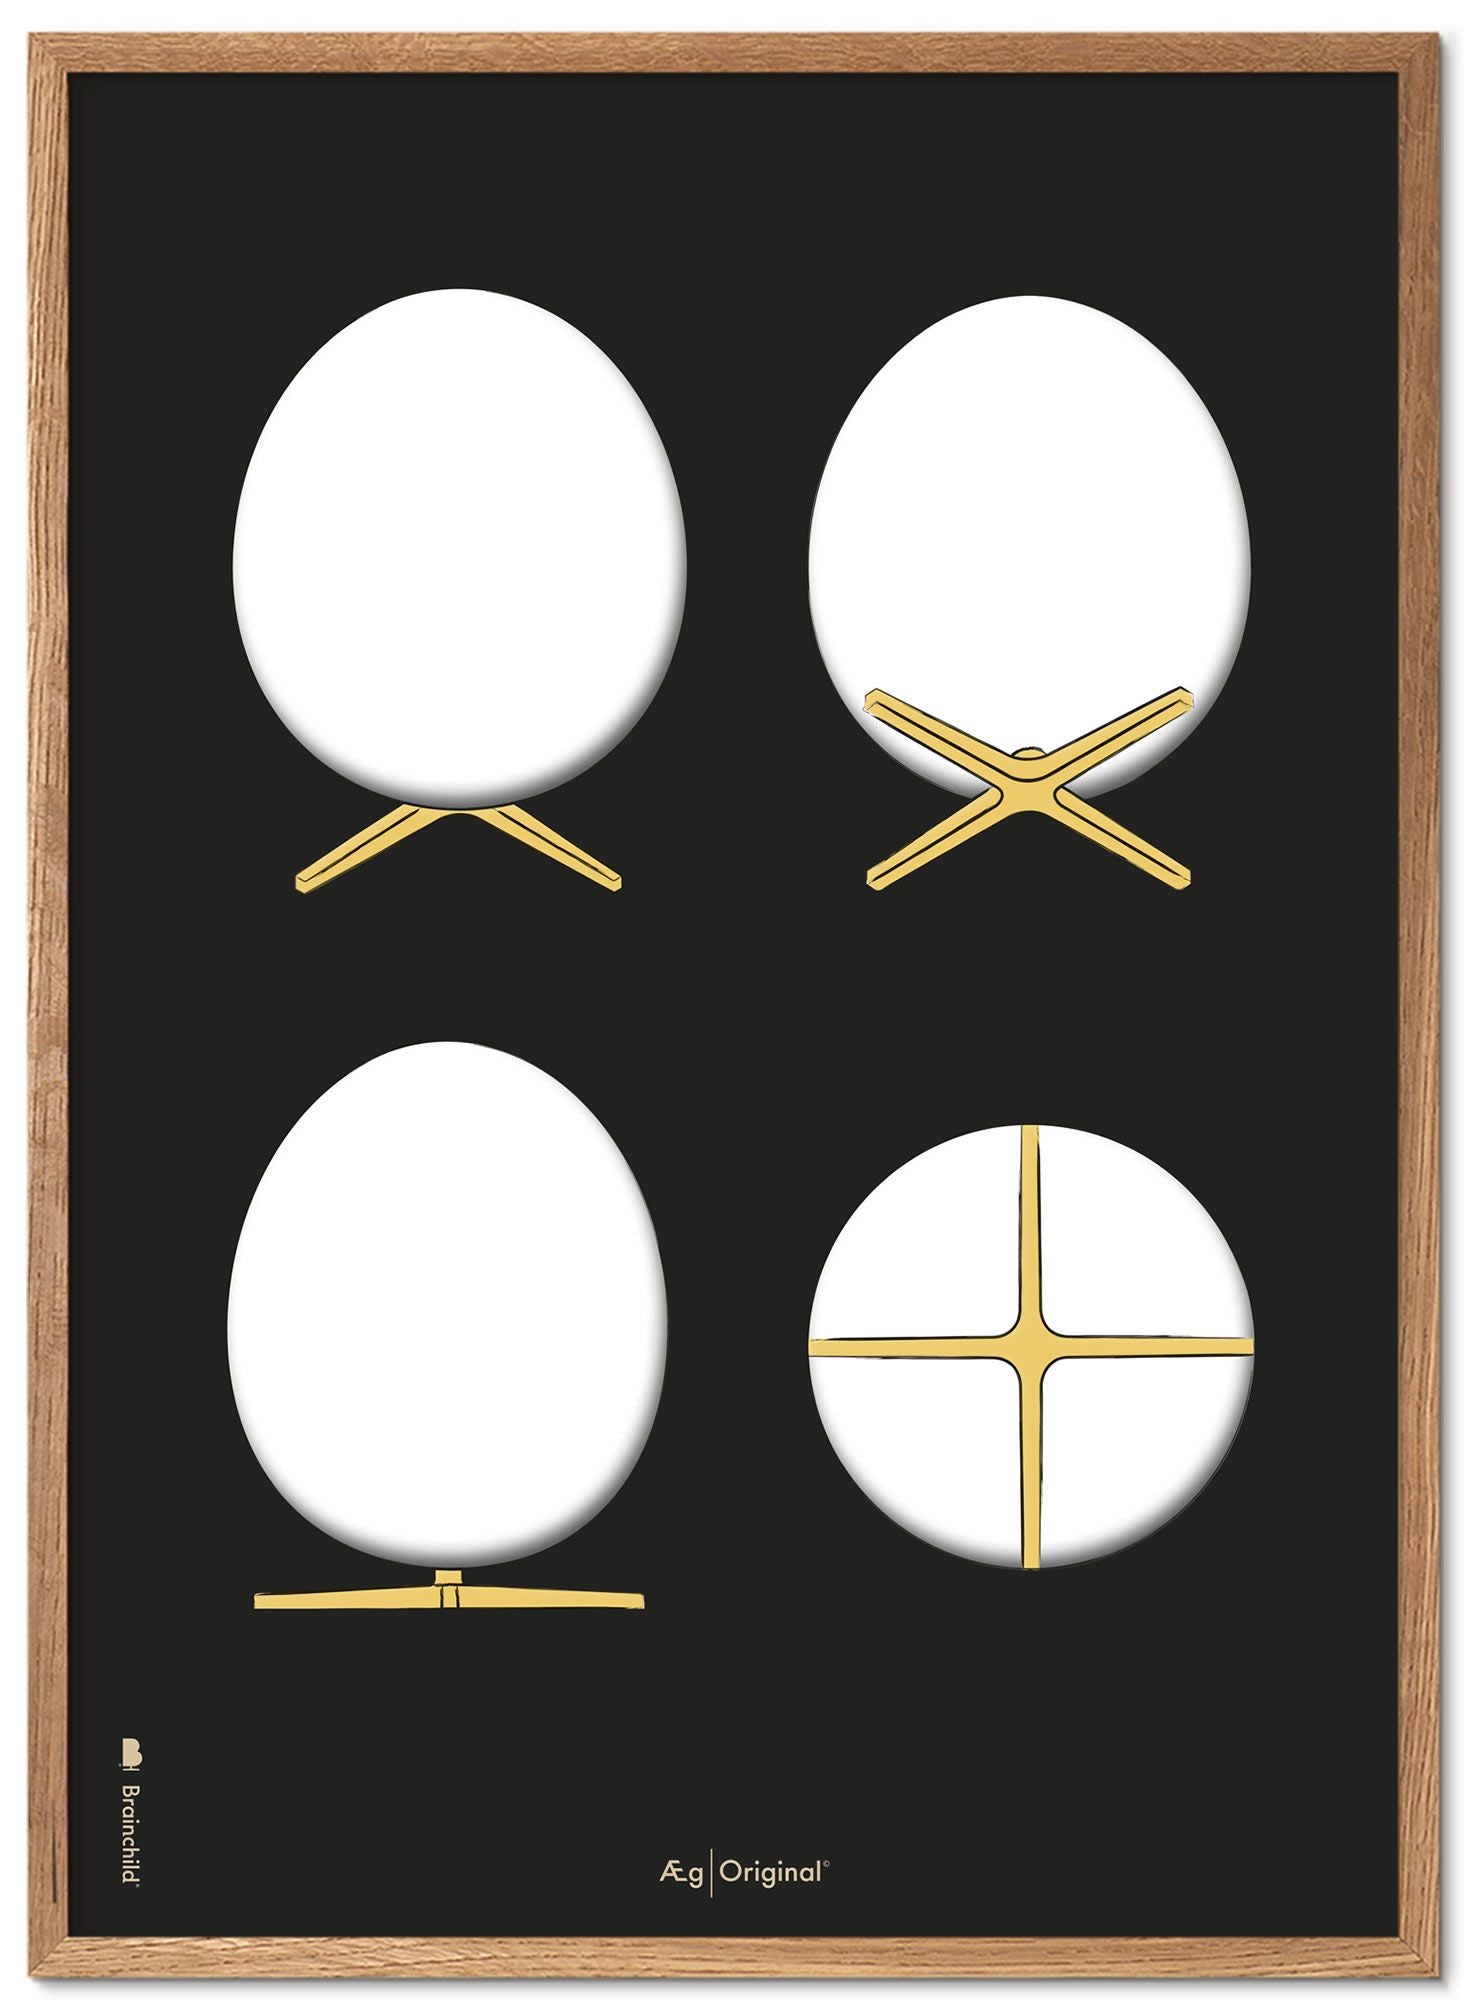 Brainchild The Egg Design Sketches Poster Frame Made Of Light Wood 70x100 Cm, Black Background